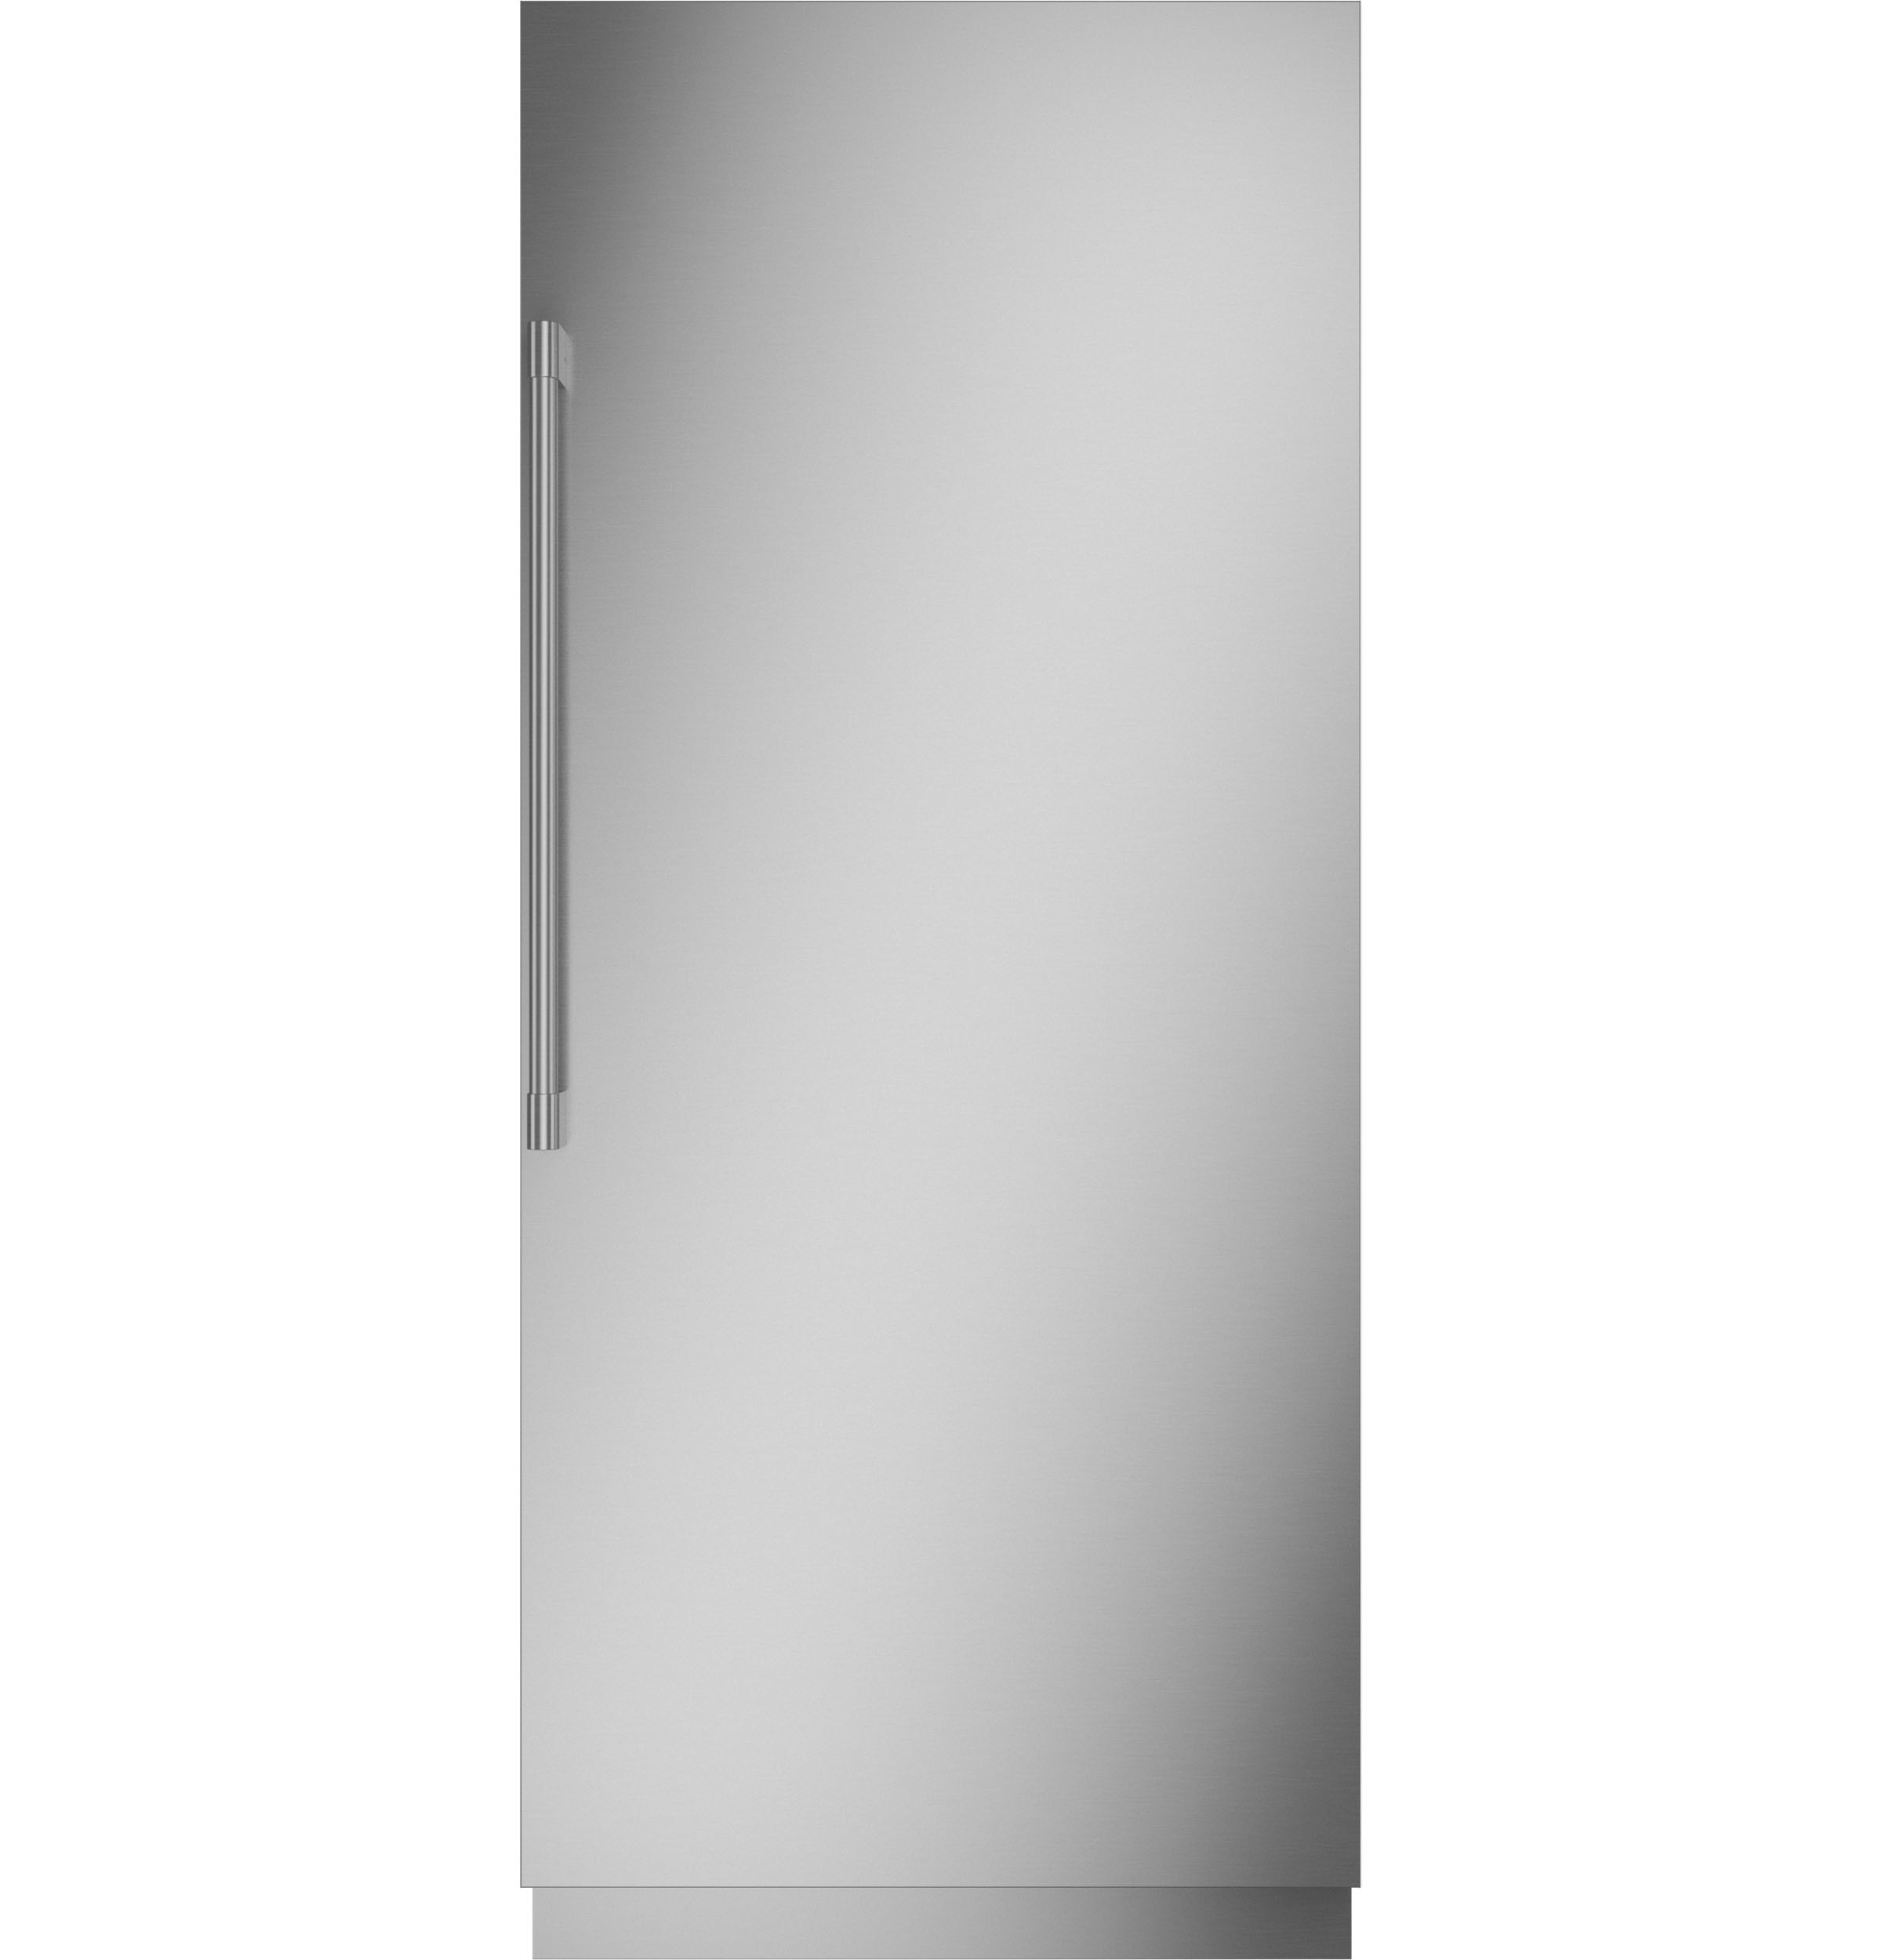 Monogram® 21.1 Cu. Ft. Panel Ready Built In Column Refrigerator